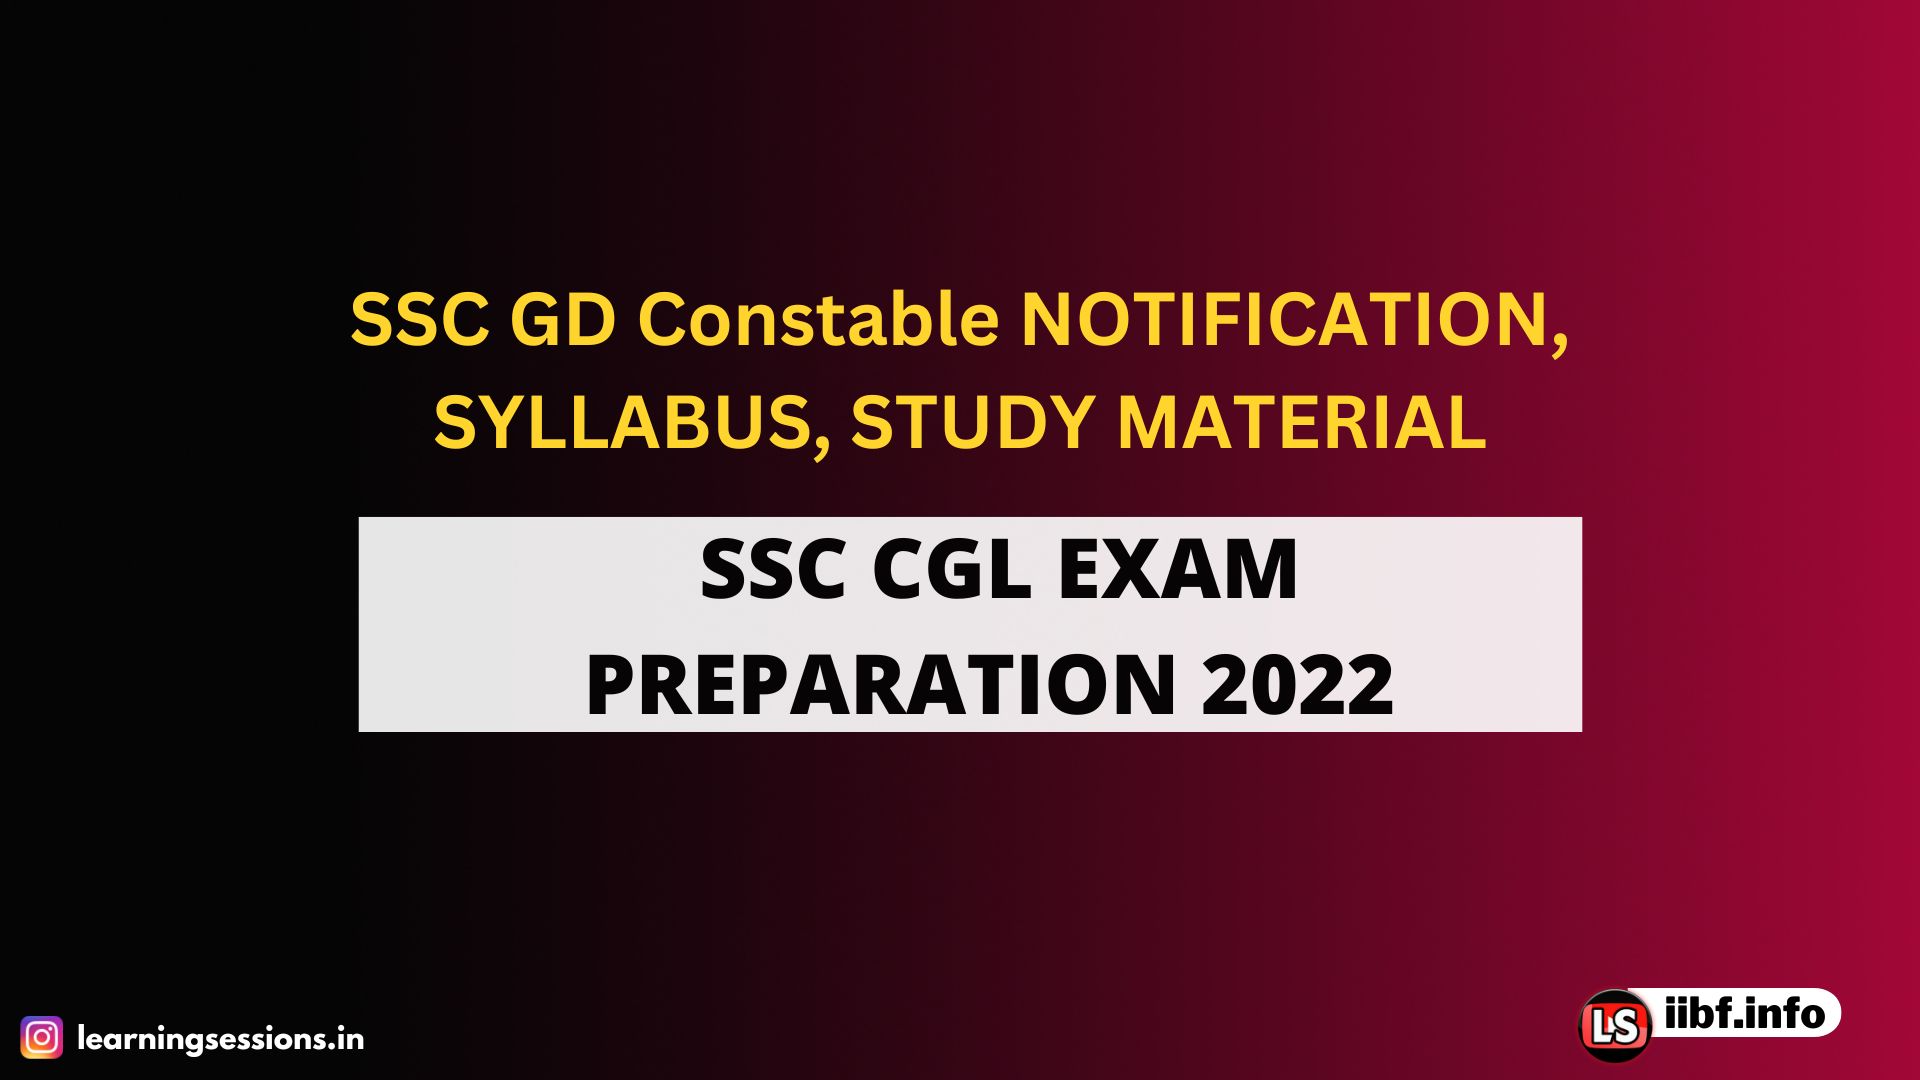 SSC GD Constable Notification 2022 | SSC GD EXAM SYLLABUS, STUDY MATERIAL | SSC GD EXAMS 2022